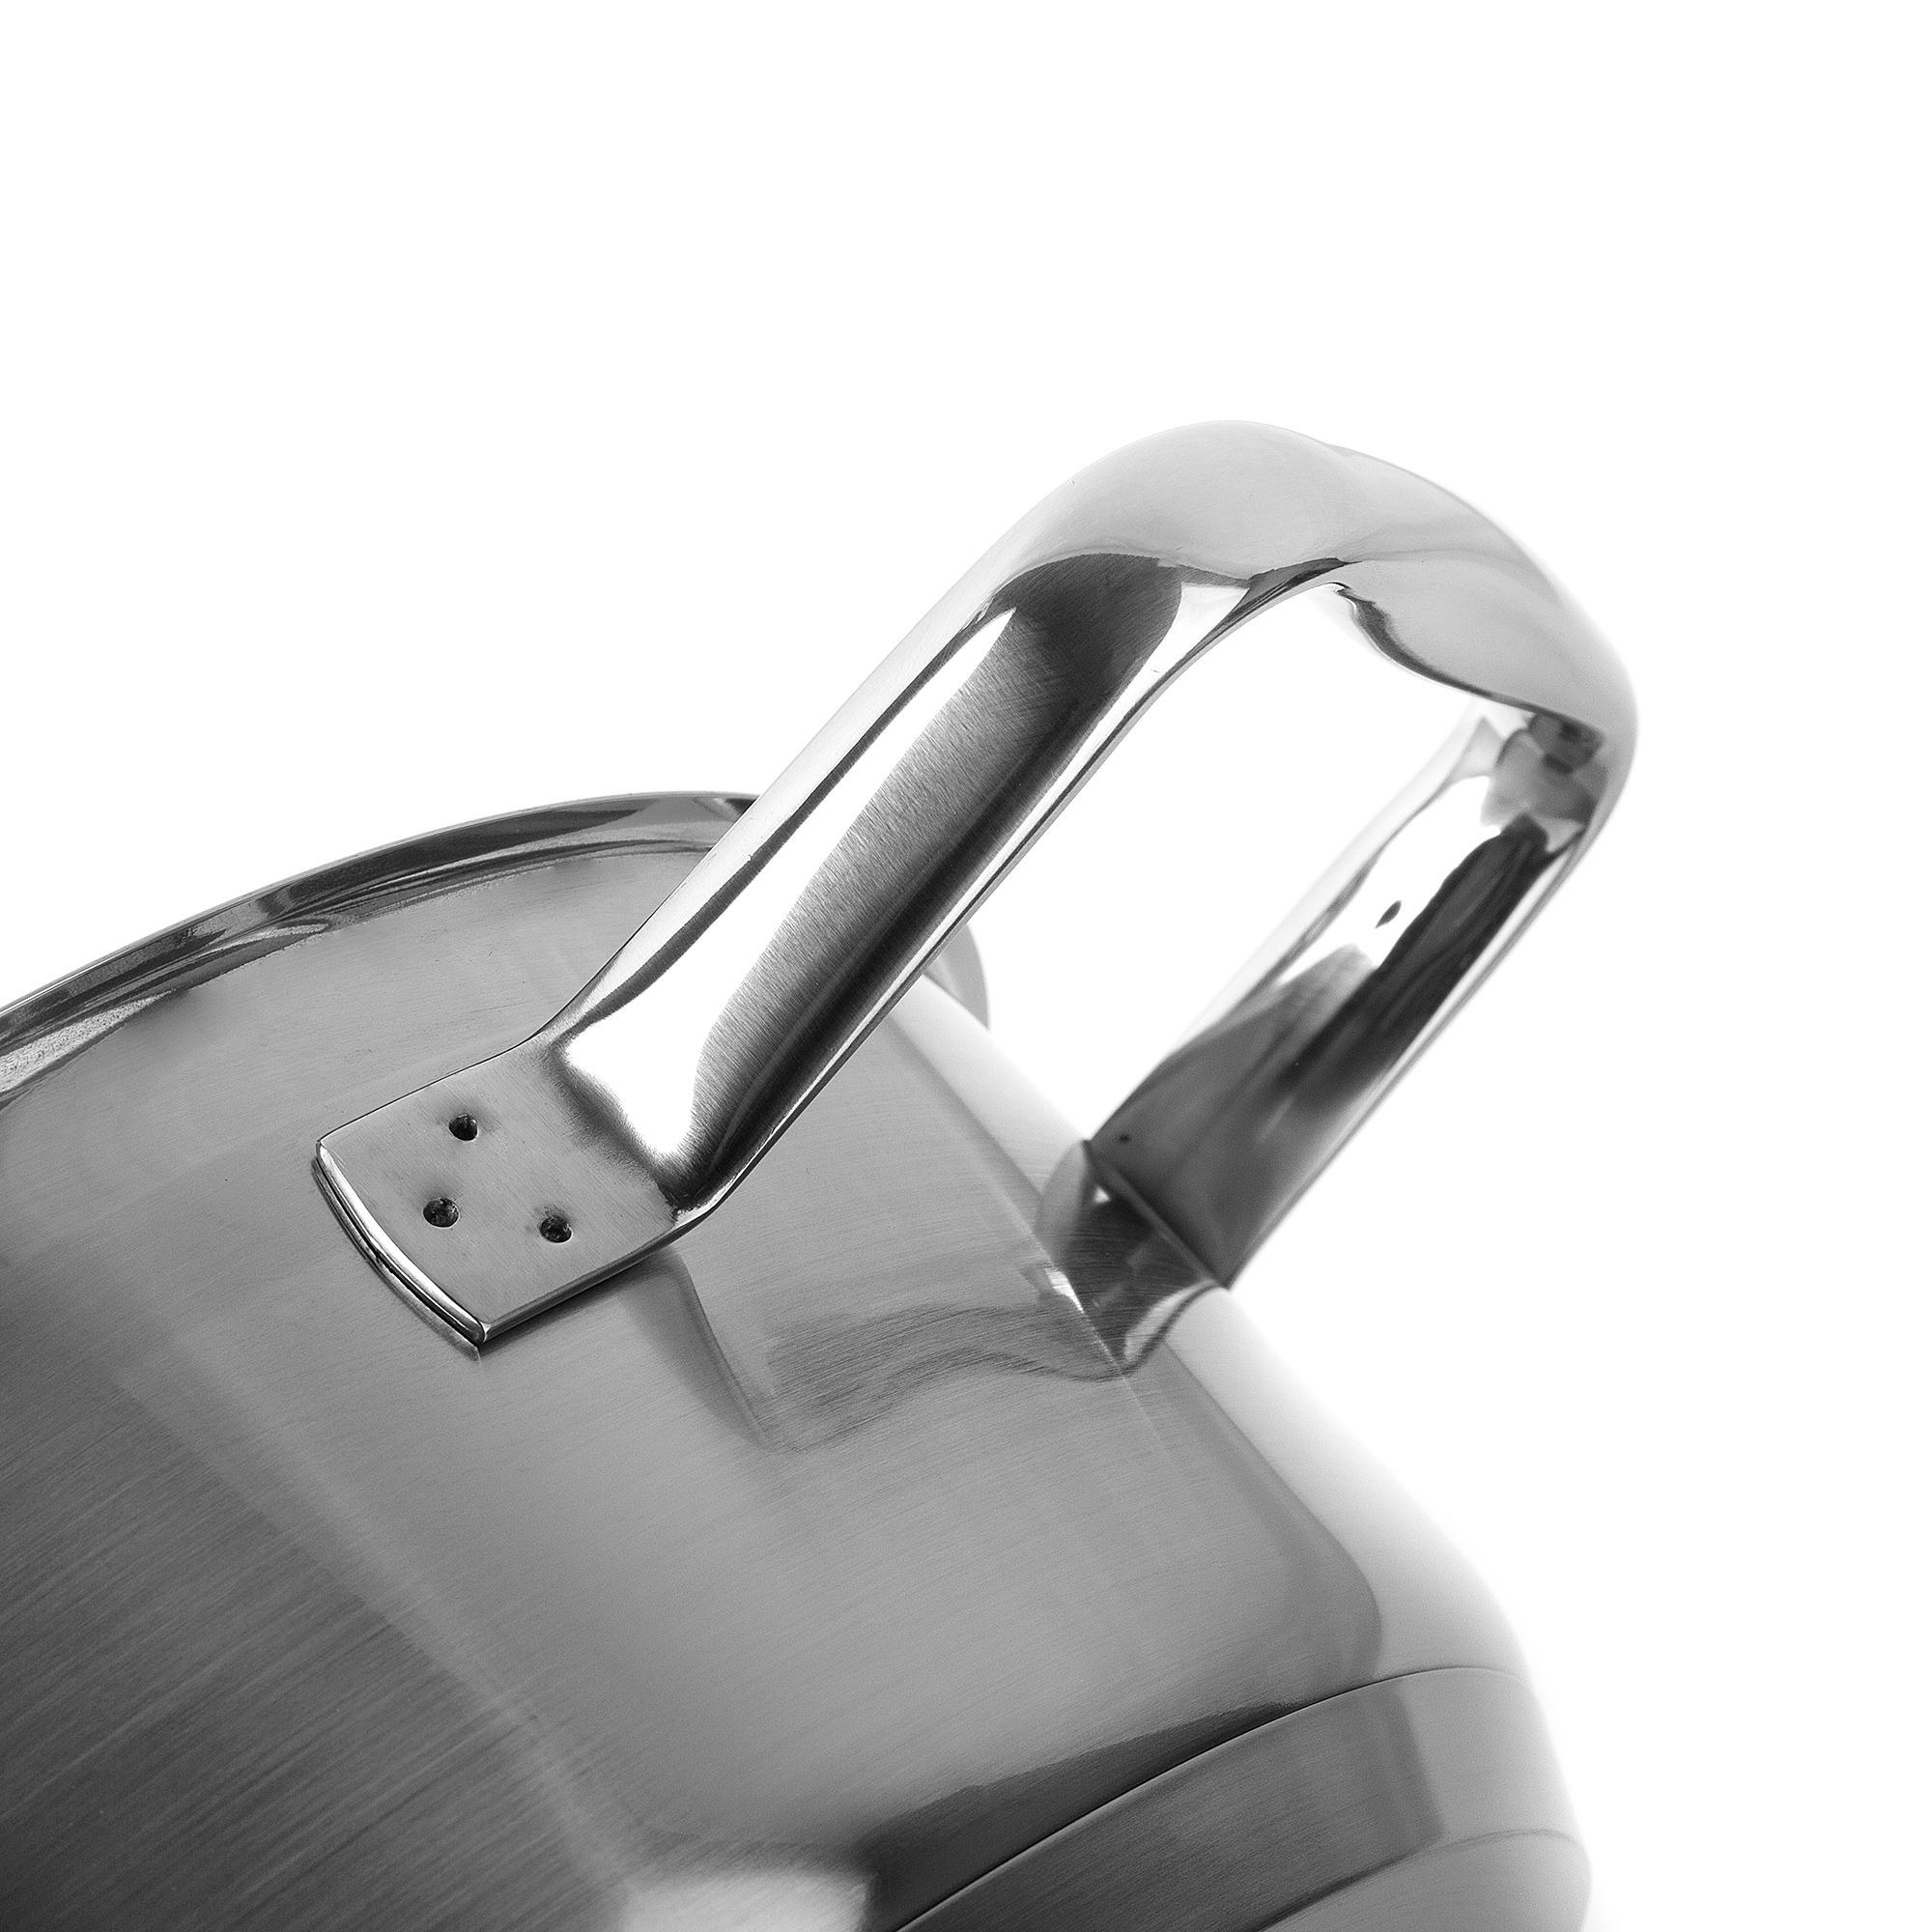 Кастрюля с крышкой Roesle Charm диаметр 20 см 2,7 л, цвет серебристый - фото 9